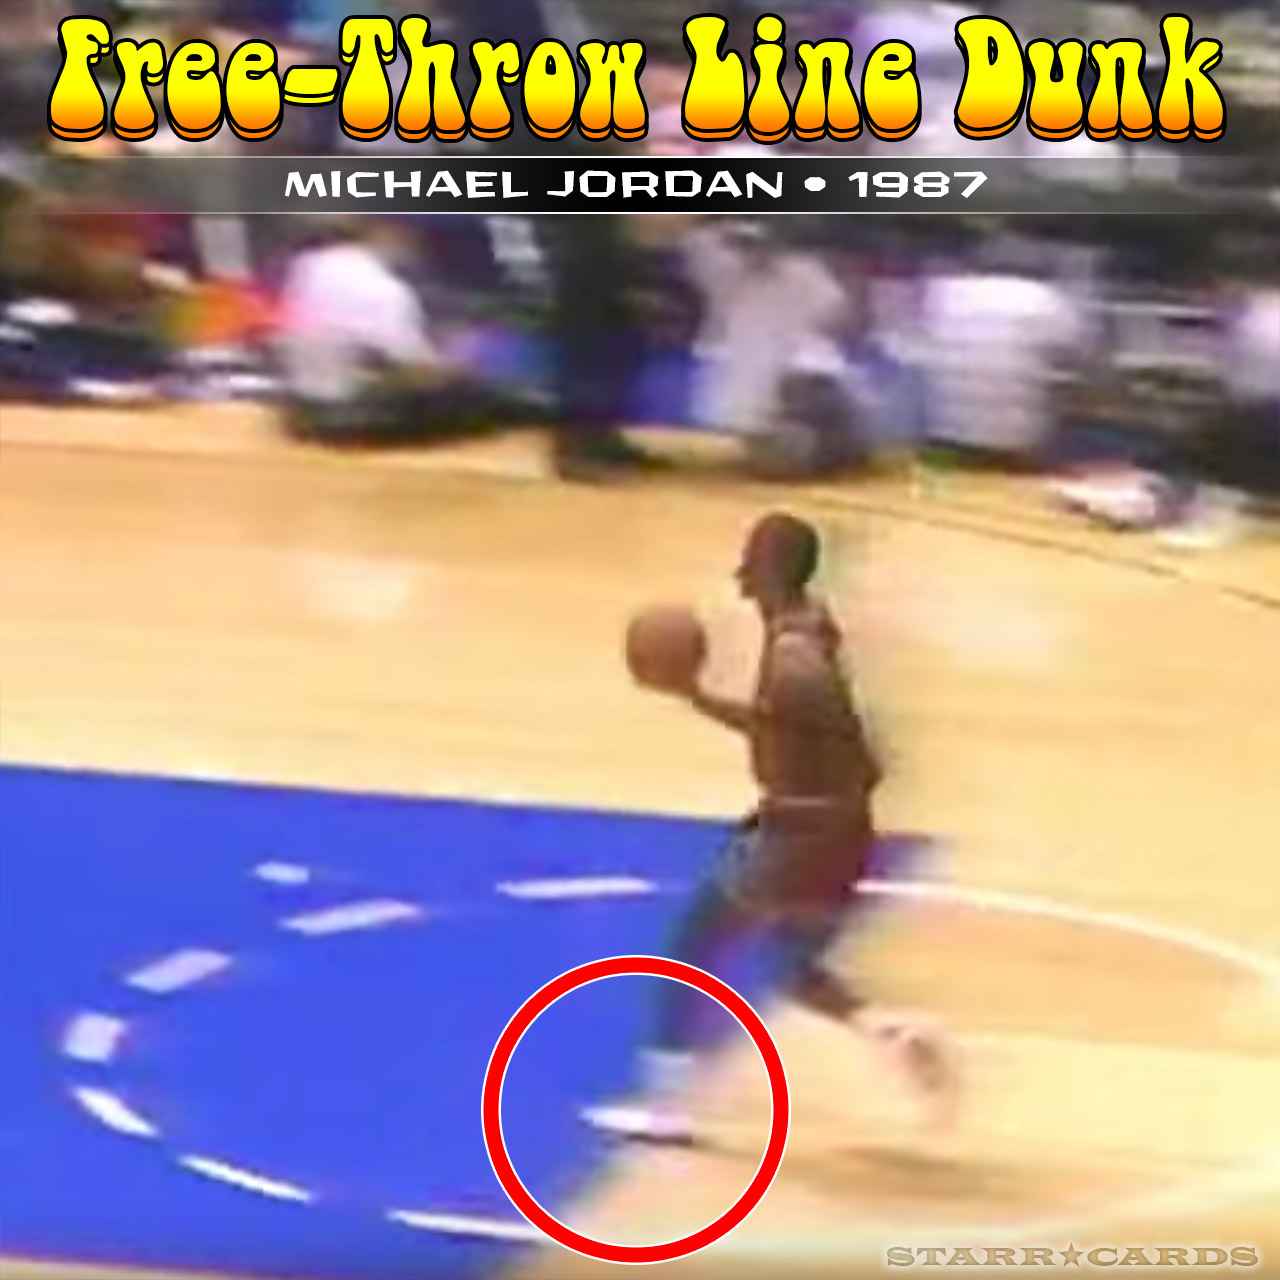 michael jordan dunks from the free throw line video